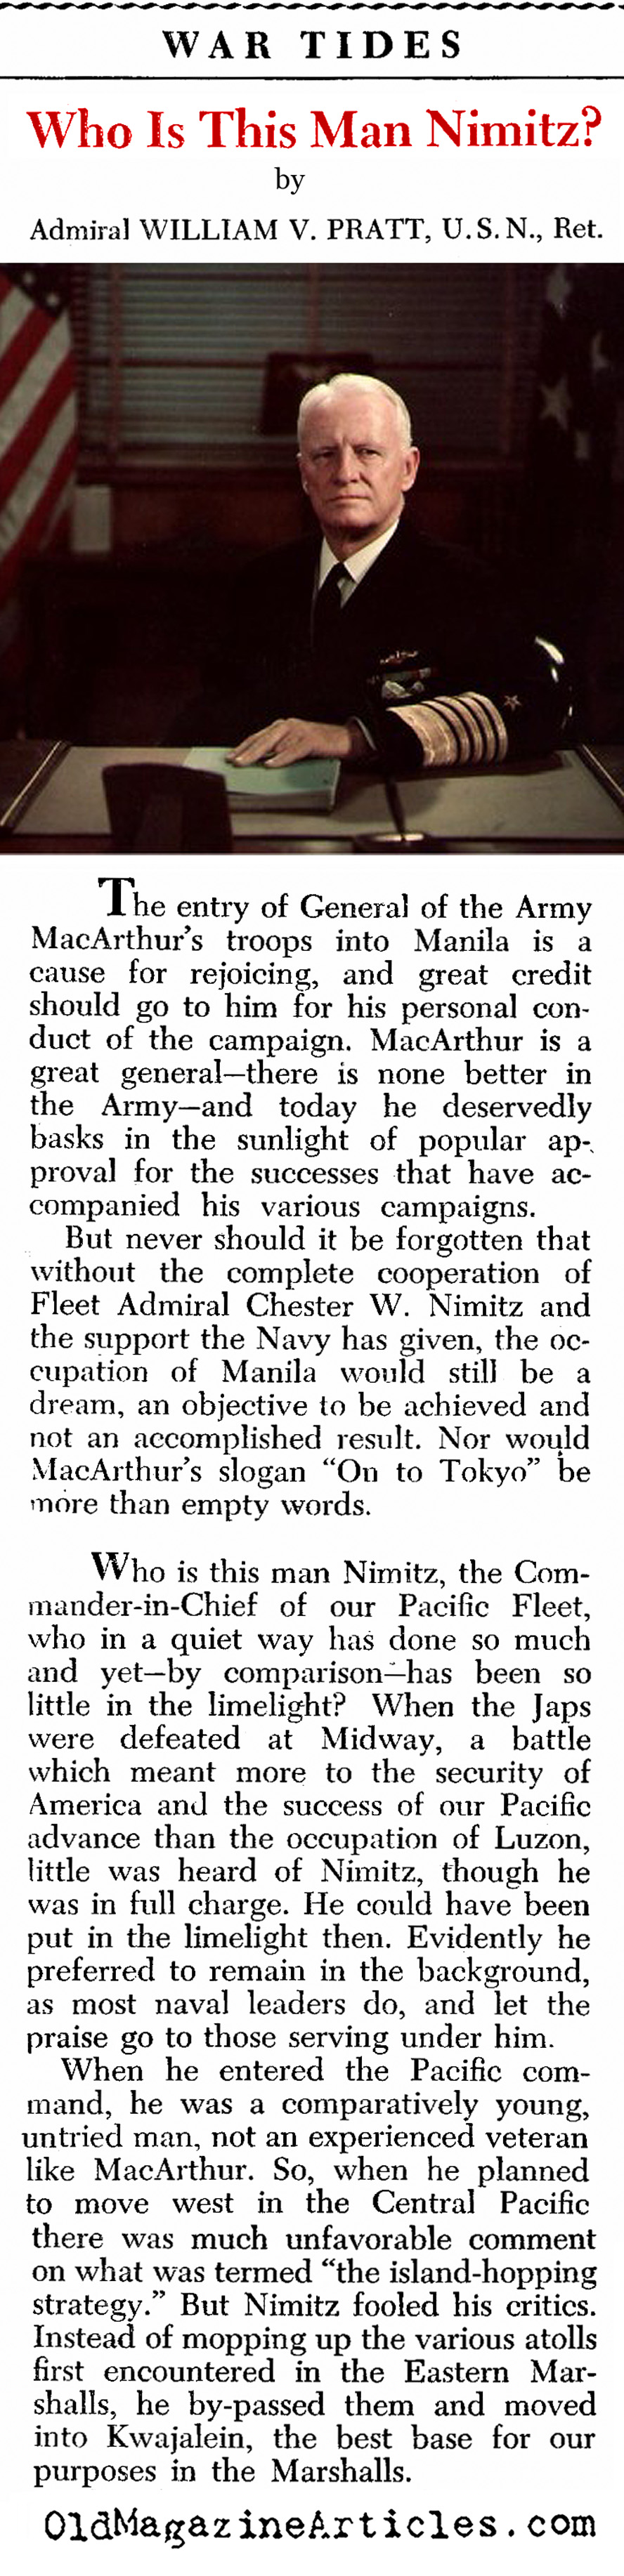 The Nimitz Strategy (Newsweek Magazine, 1945)